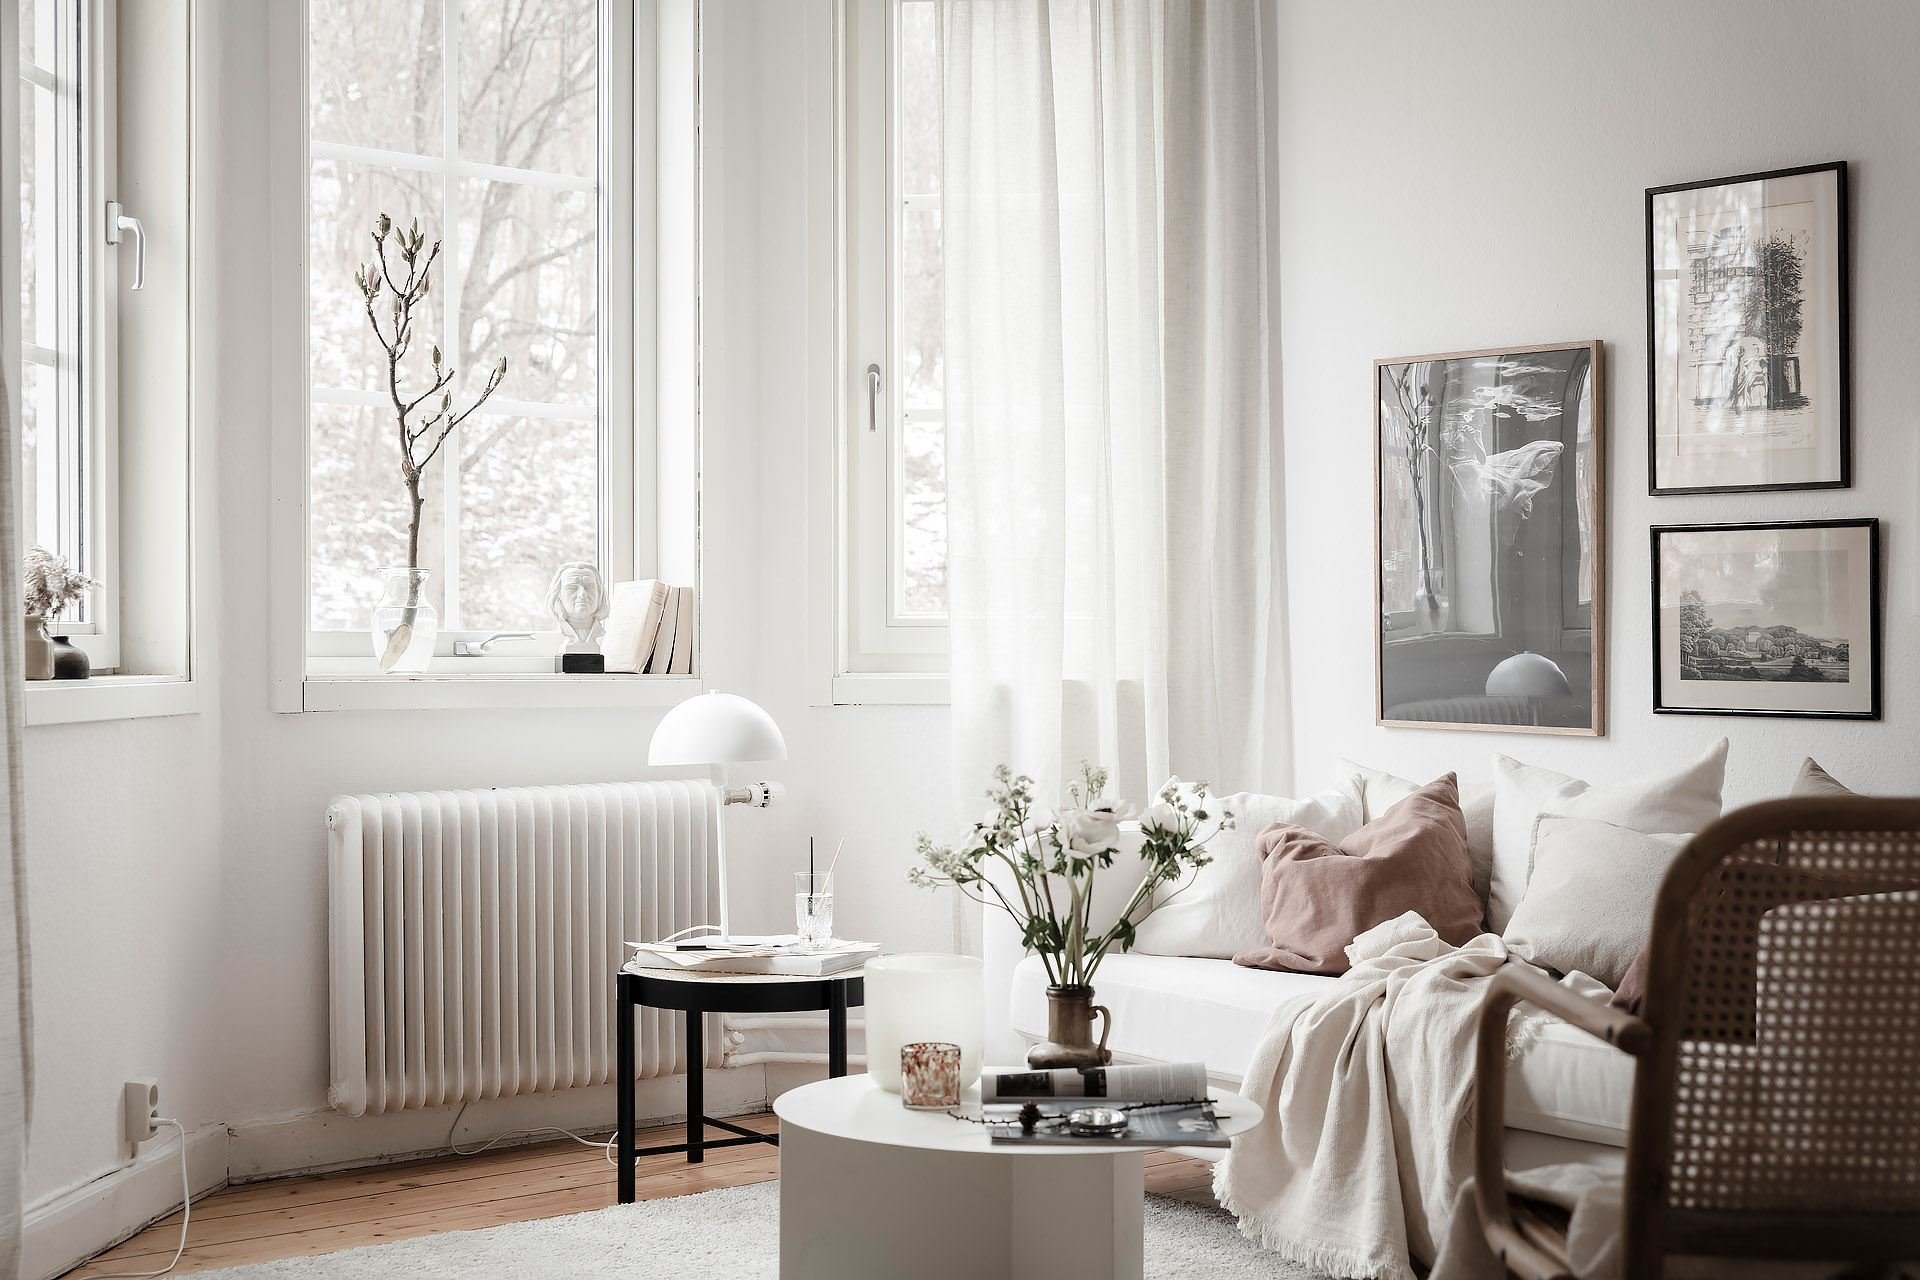 Mini piso en Suecia con decoracion moderna nordica salon con ventanas